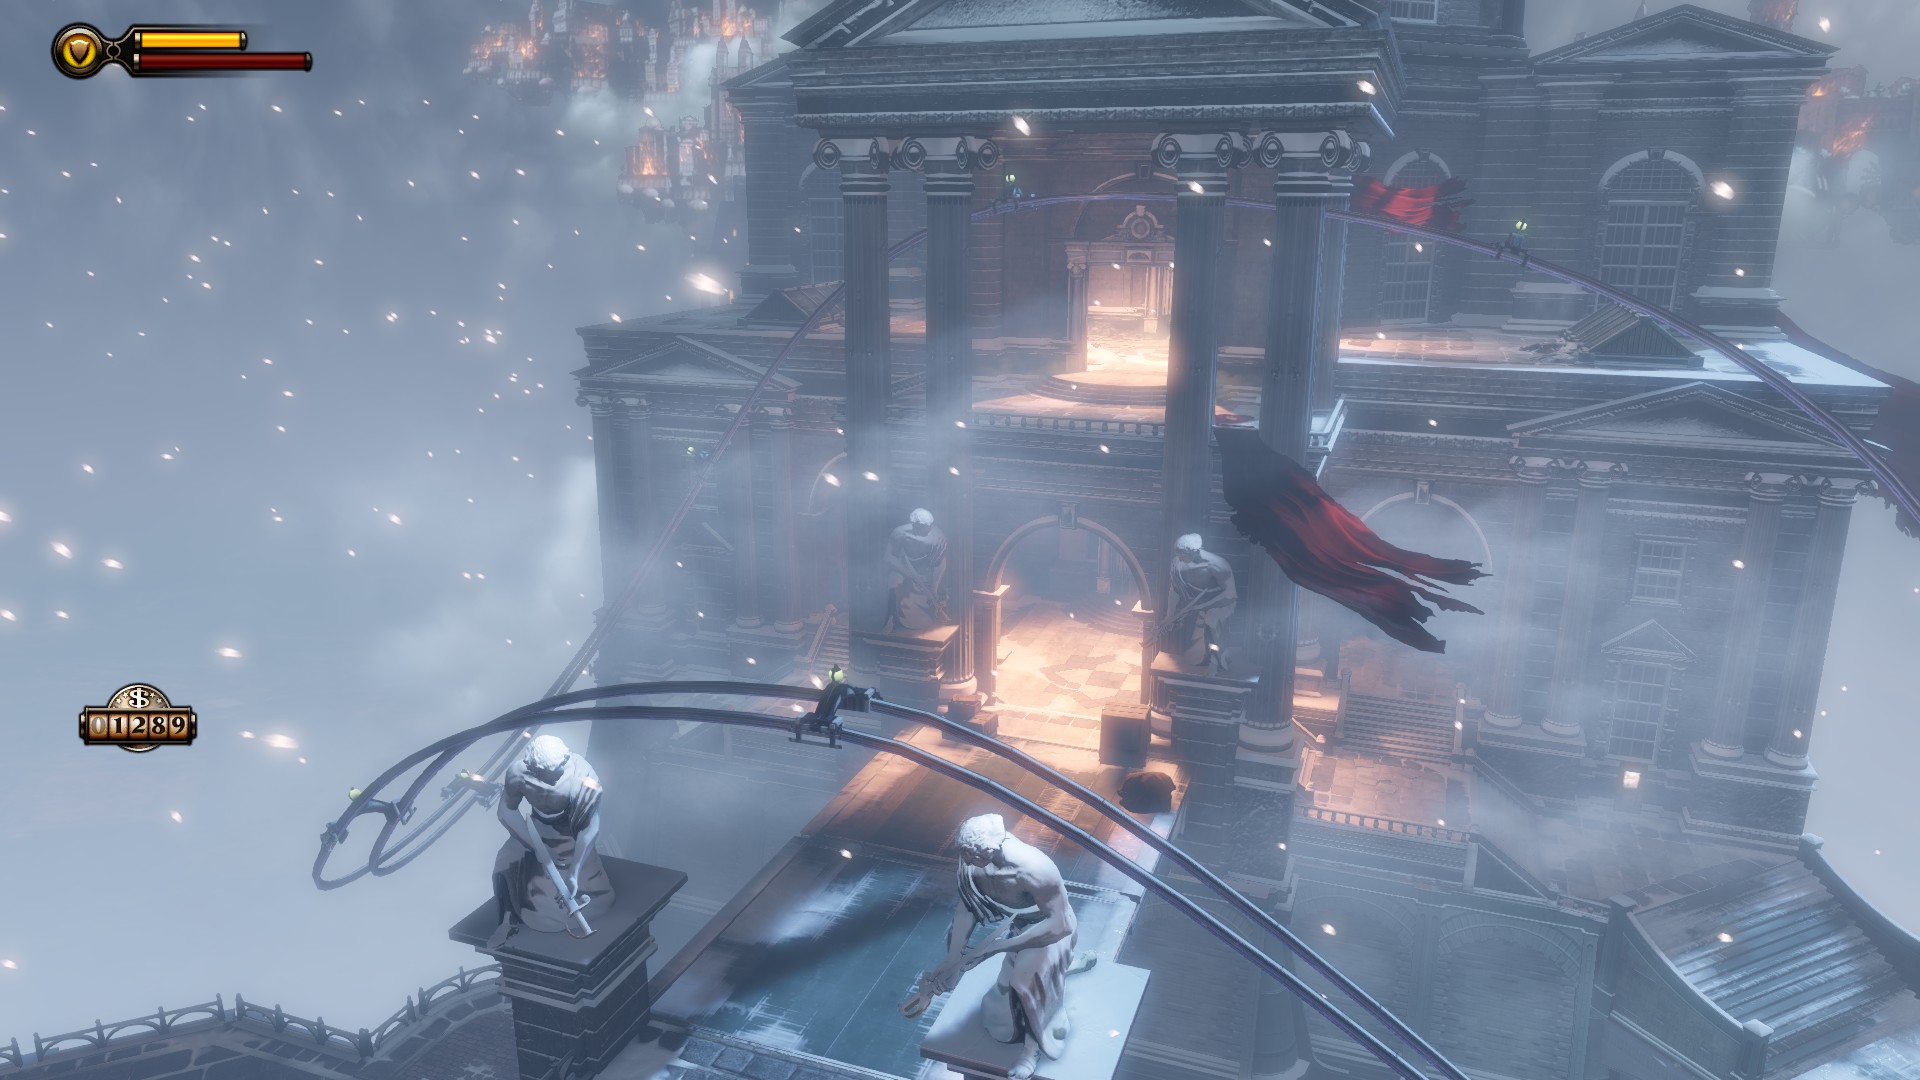 BioShock Infinite 'Clash in the Clouds' DLC brings the fight to Mac